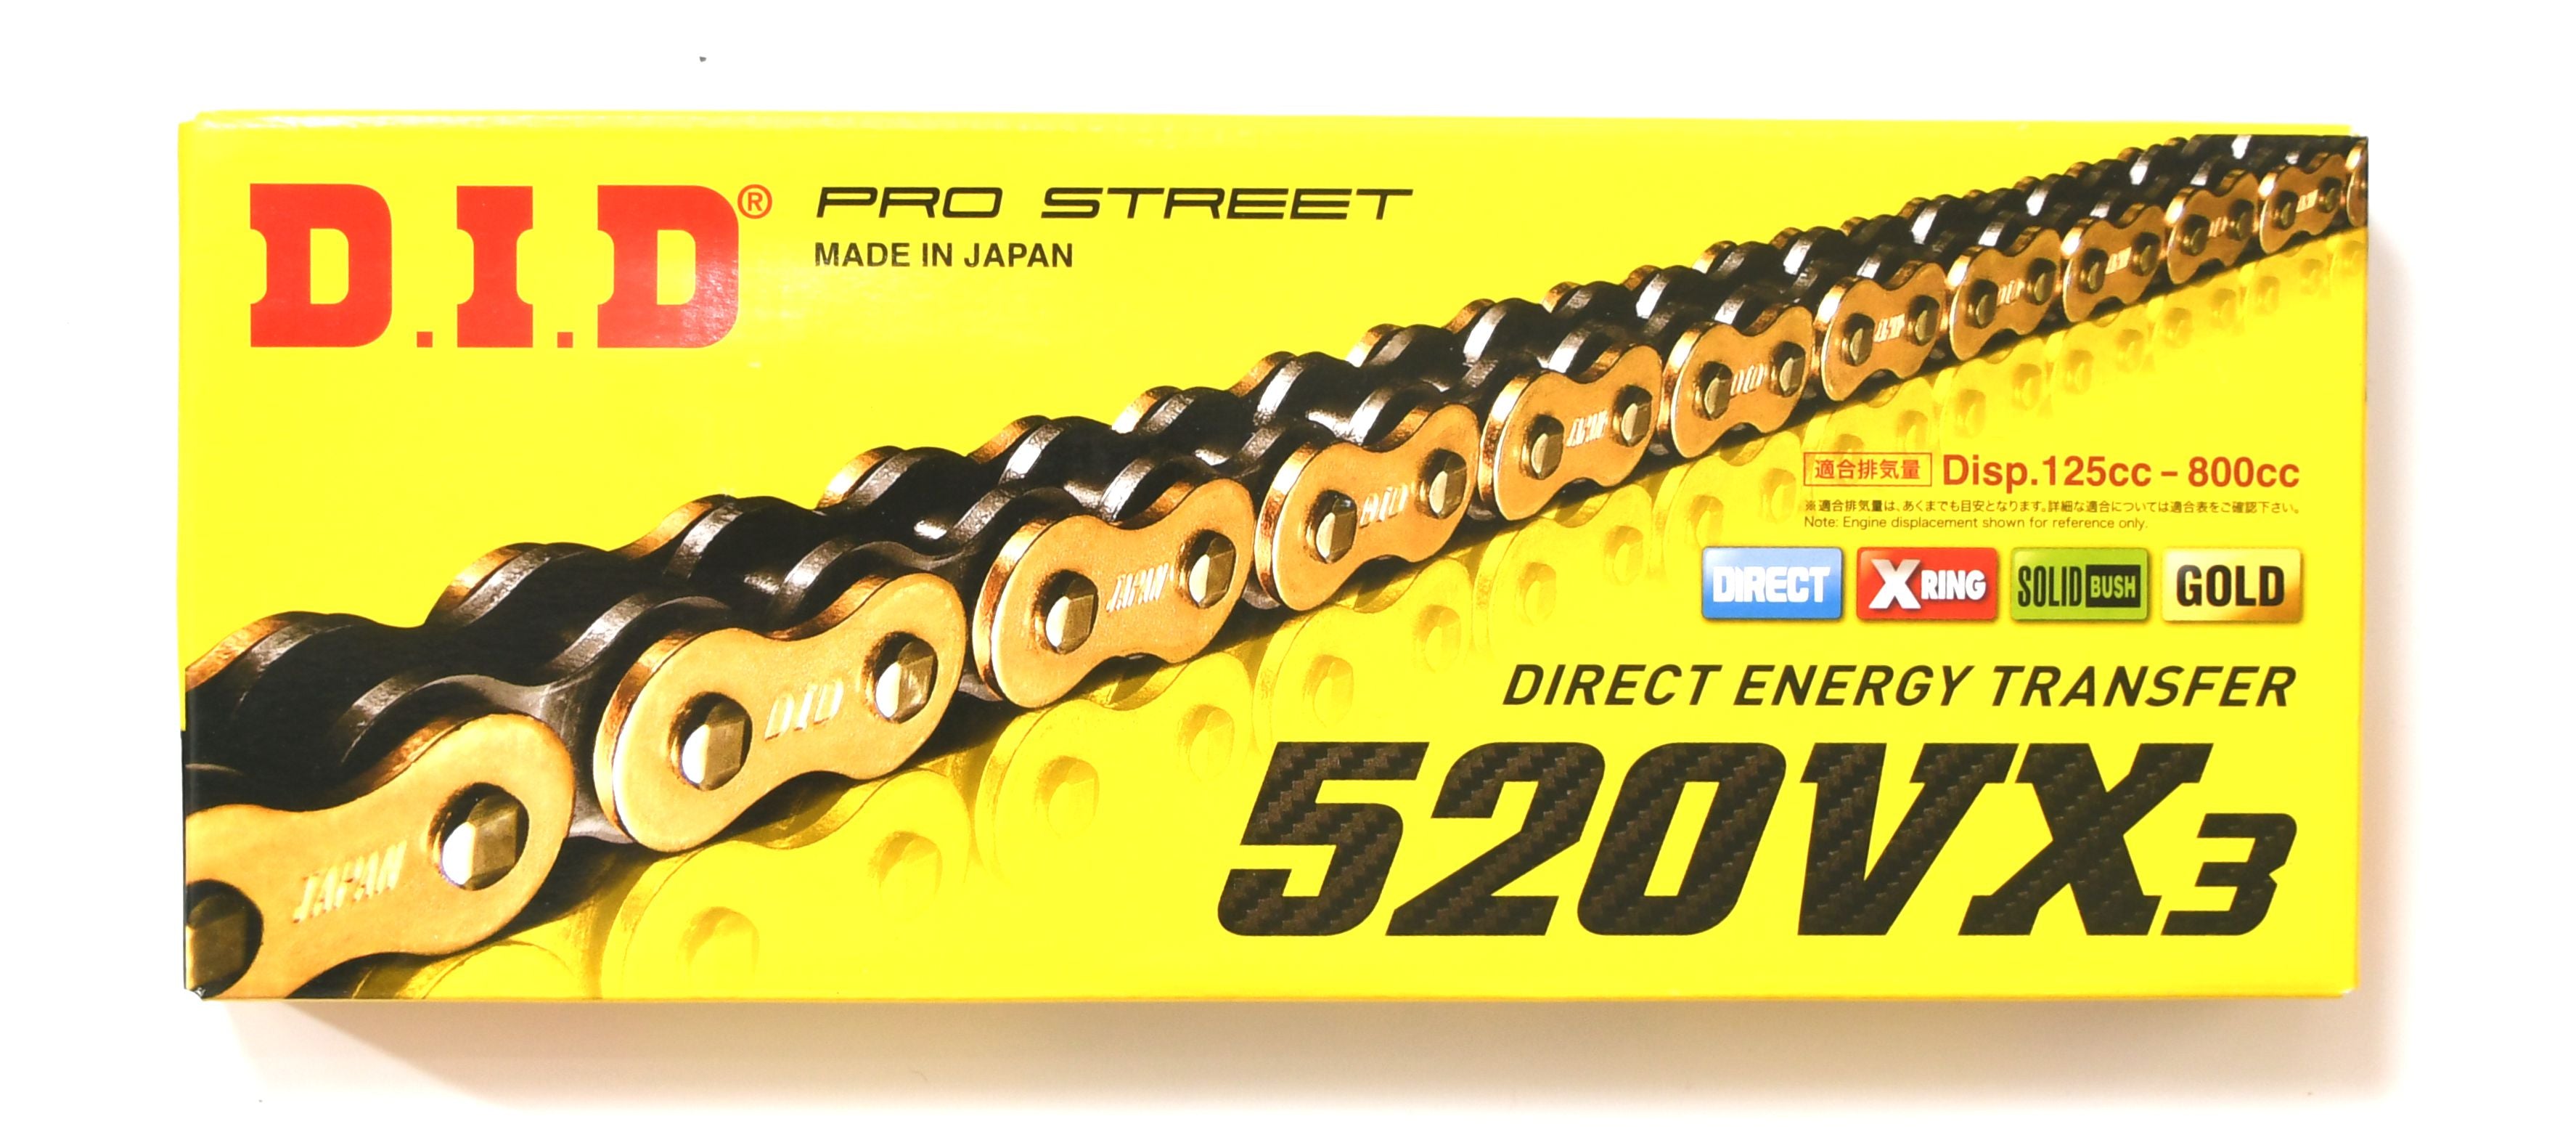 DID 520 VX3 Pro Street Heavy Duty Chain 110 Links - Gold, Silver or Steel